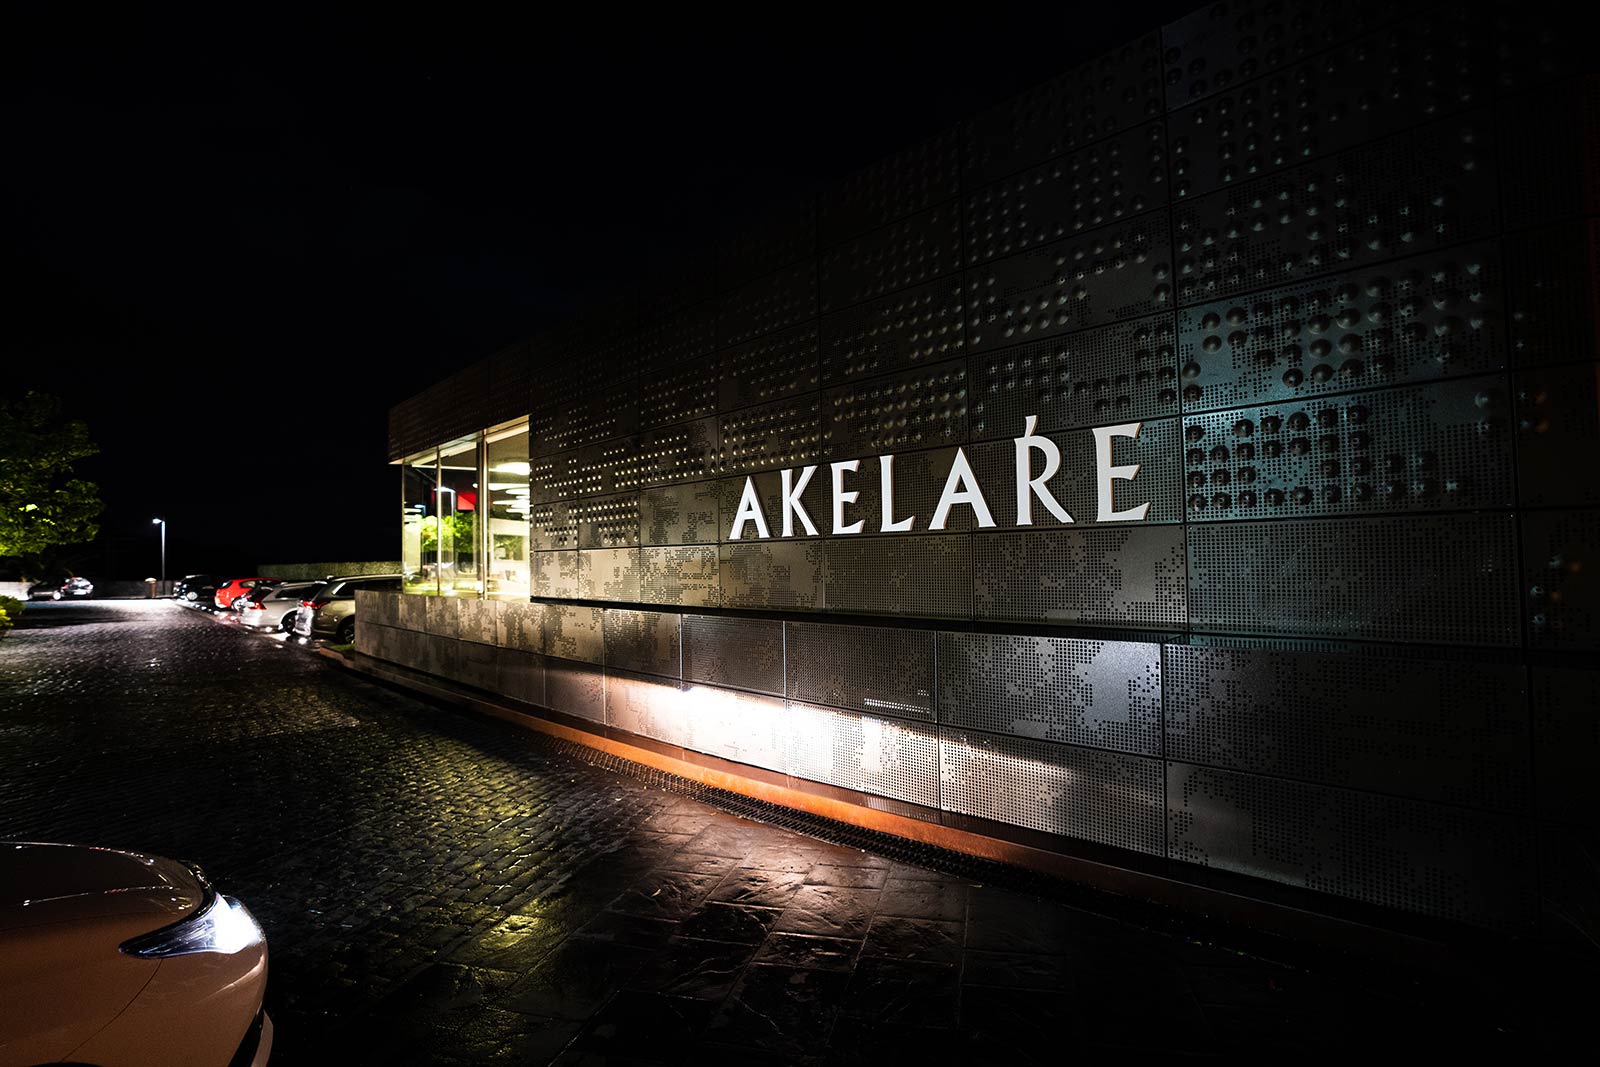 Akelarre at night in San Sebastian, Spain. The West Africa series pt1, reflection post